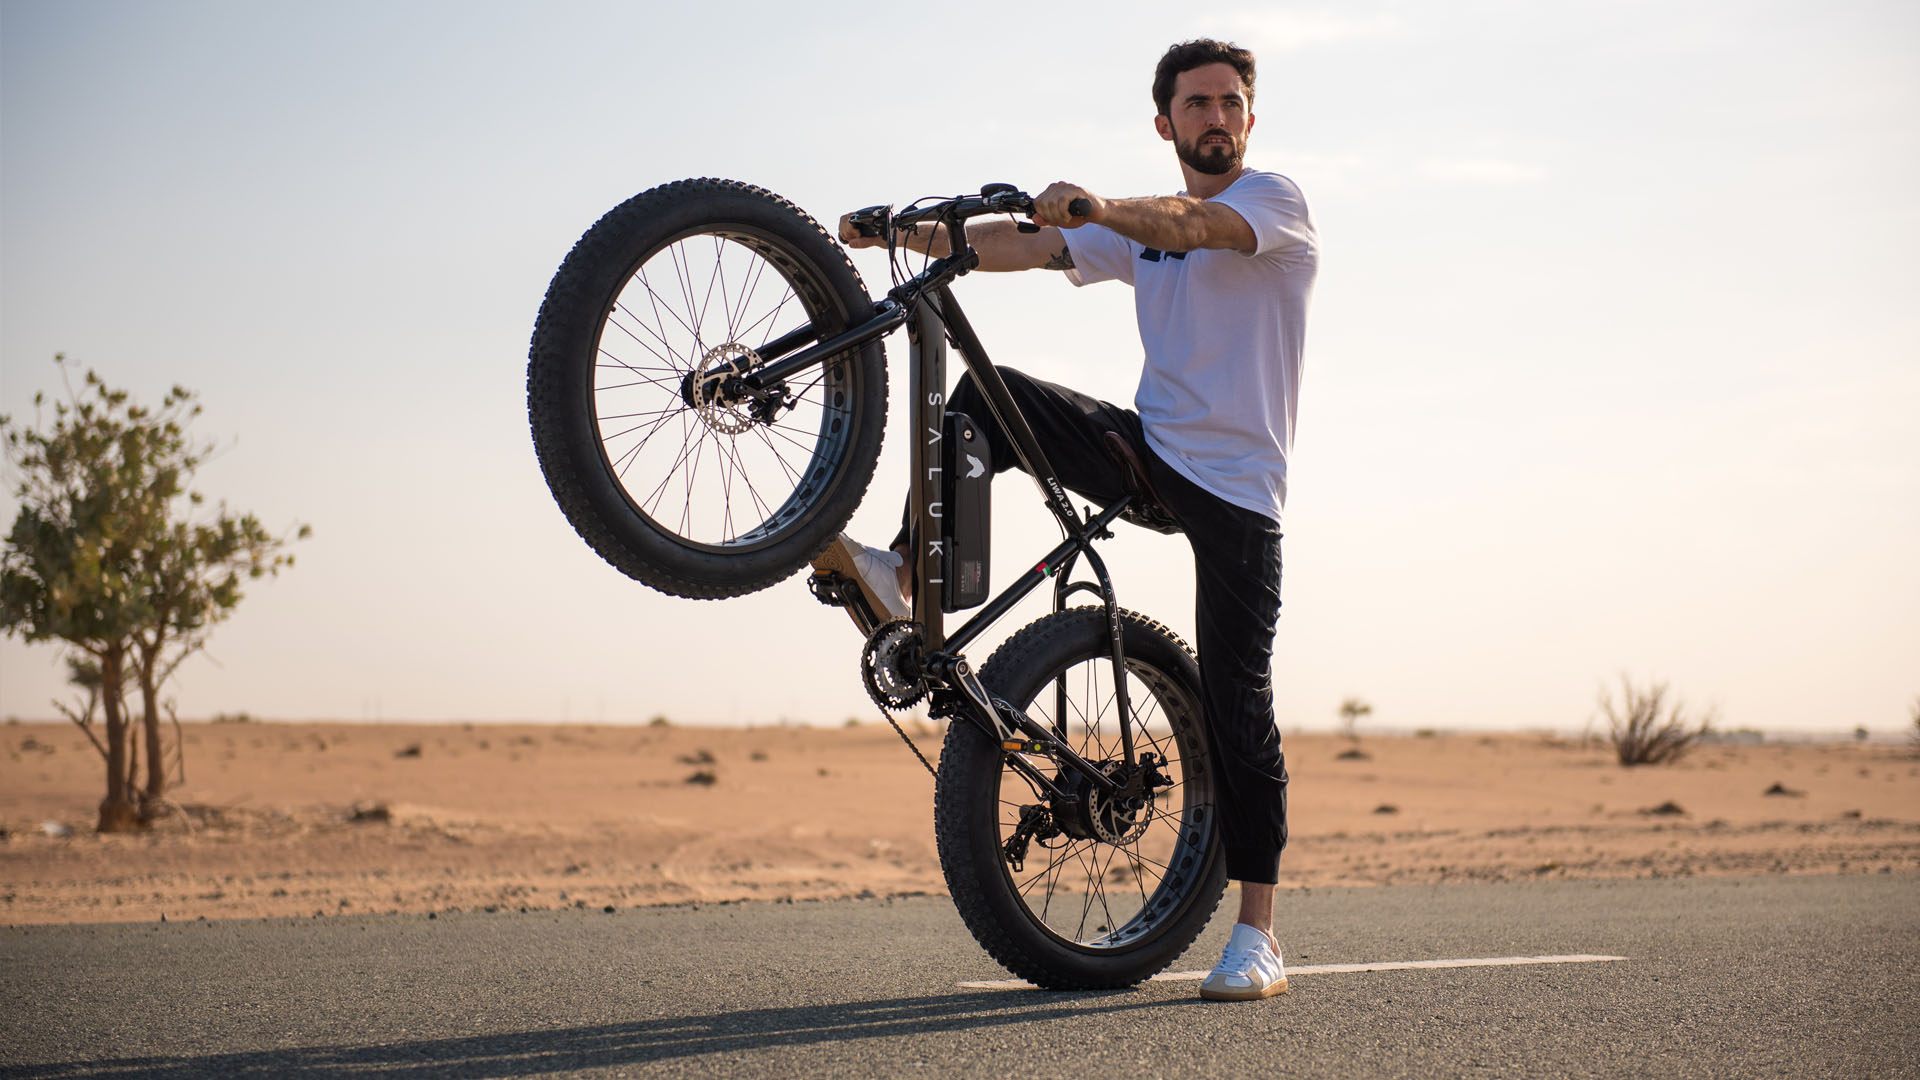 Saluki Electric Bike Dubai UAE